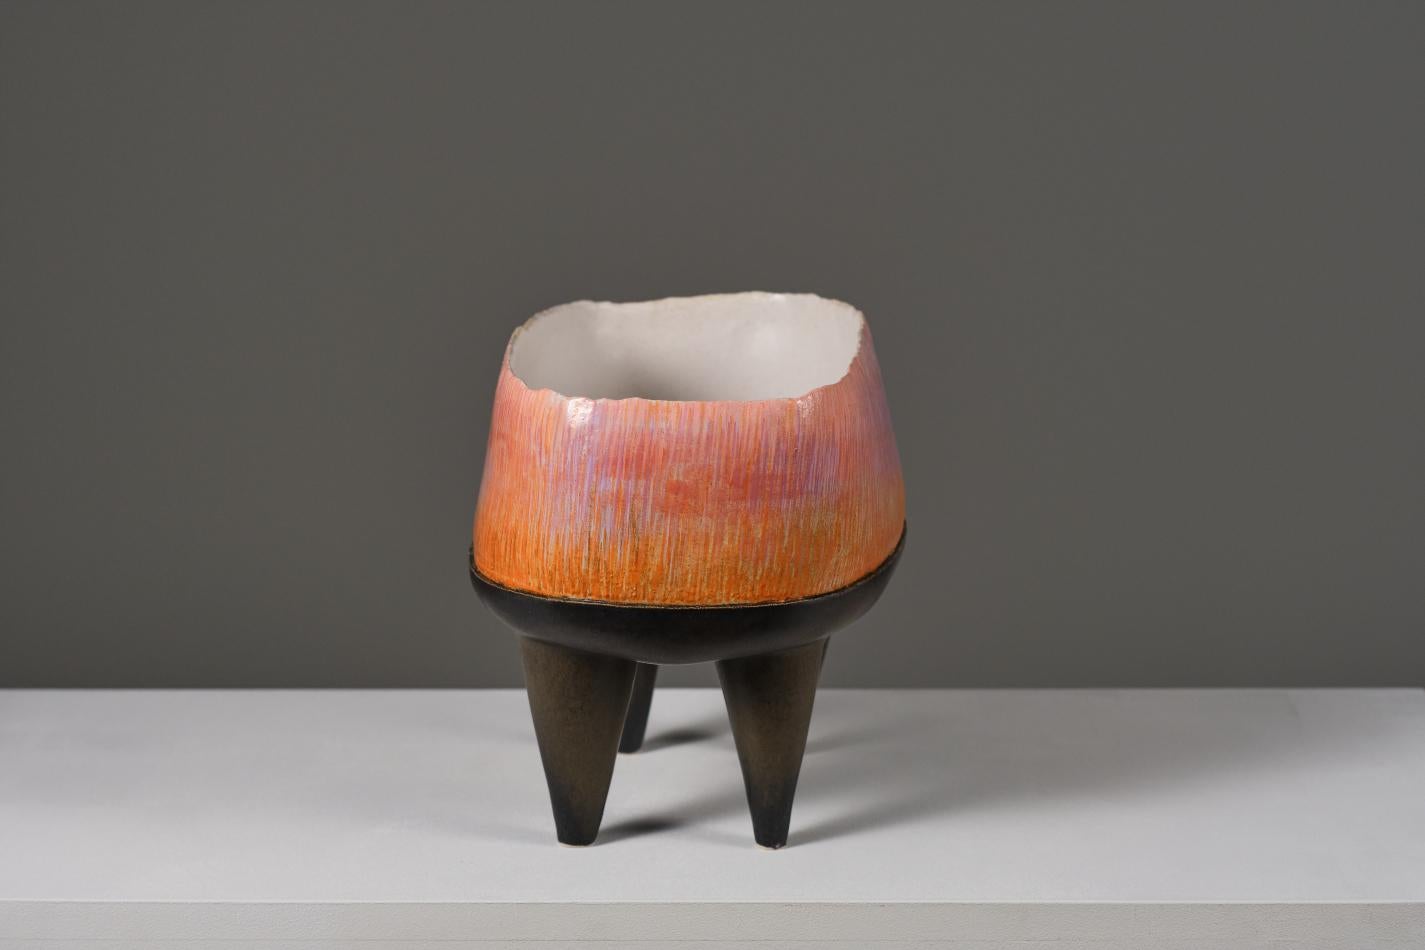 Glazed Objecte #1 by Rosa Cortiella, Grogged Clay Fruit Bowl For Sale